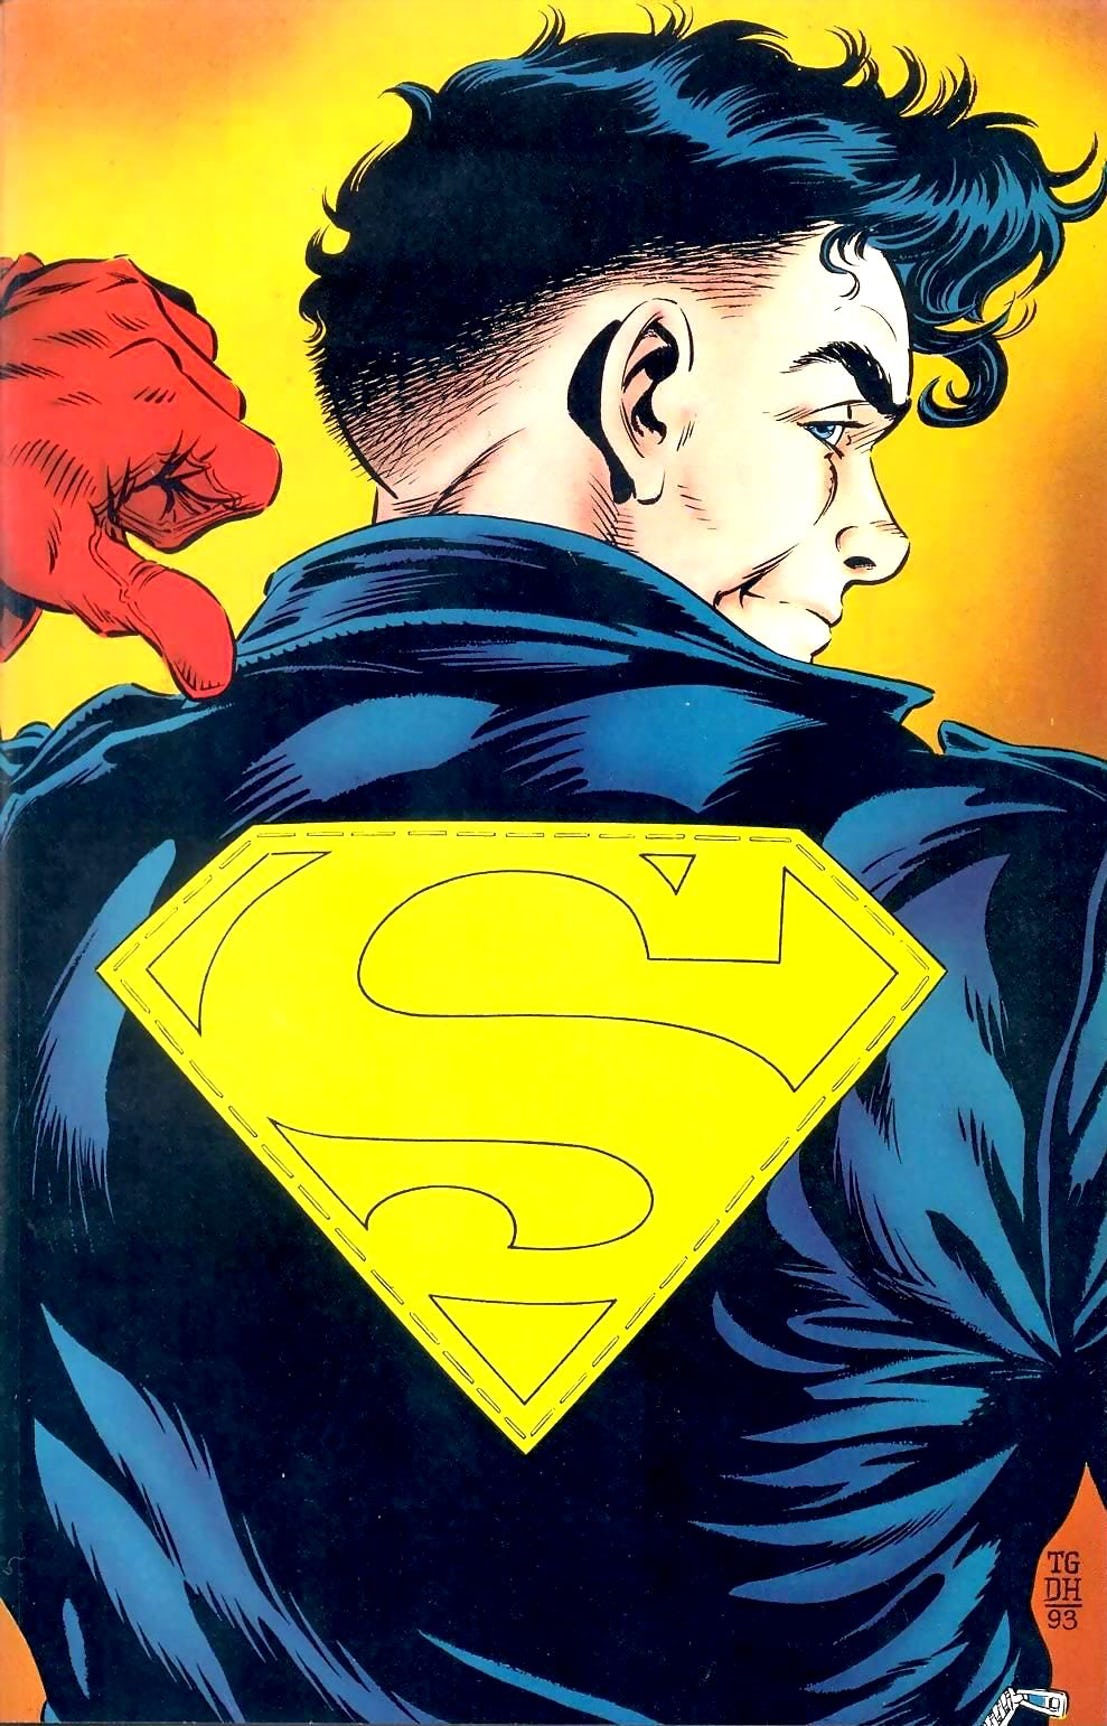 Joshua Orpin As Superboy Wallpapers